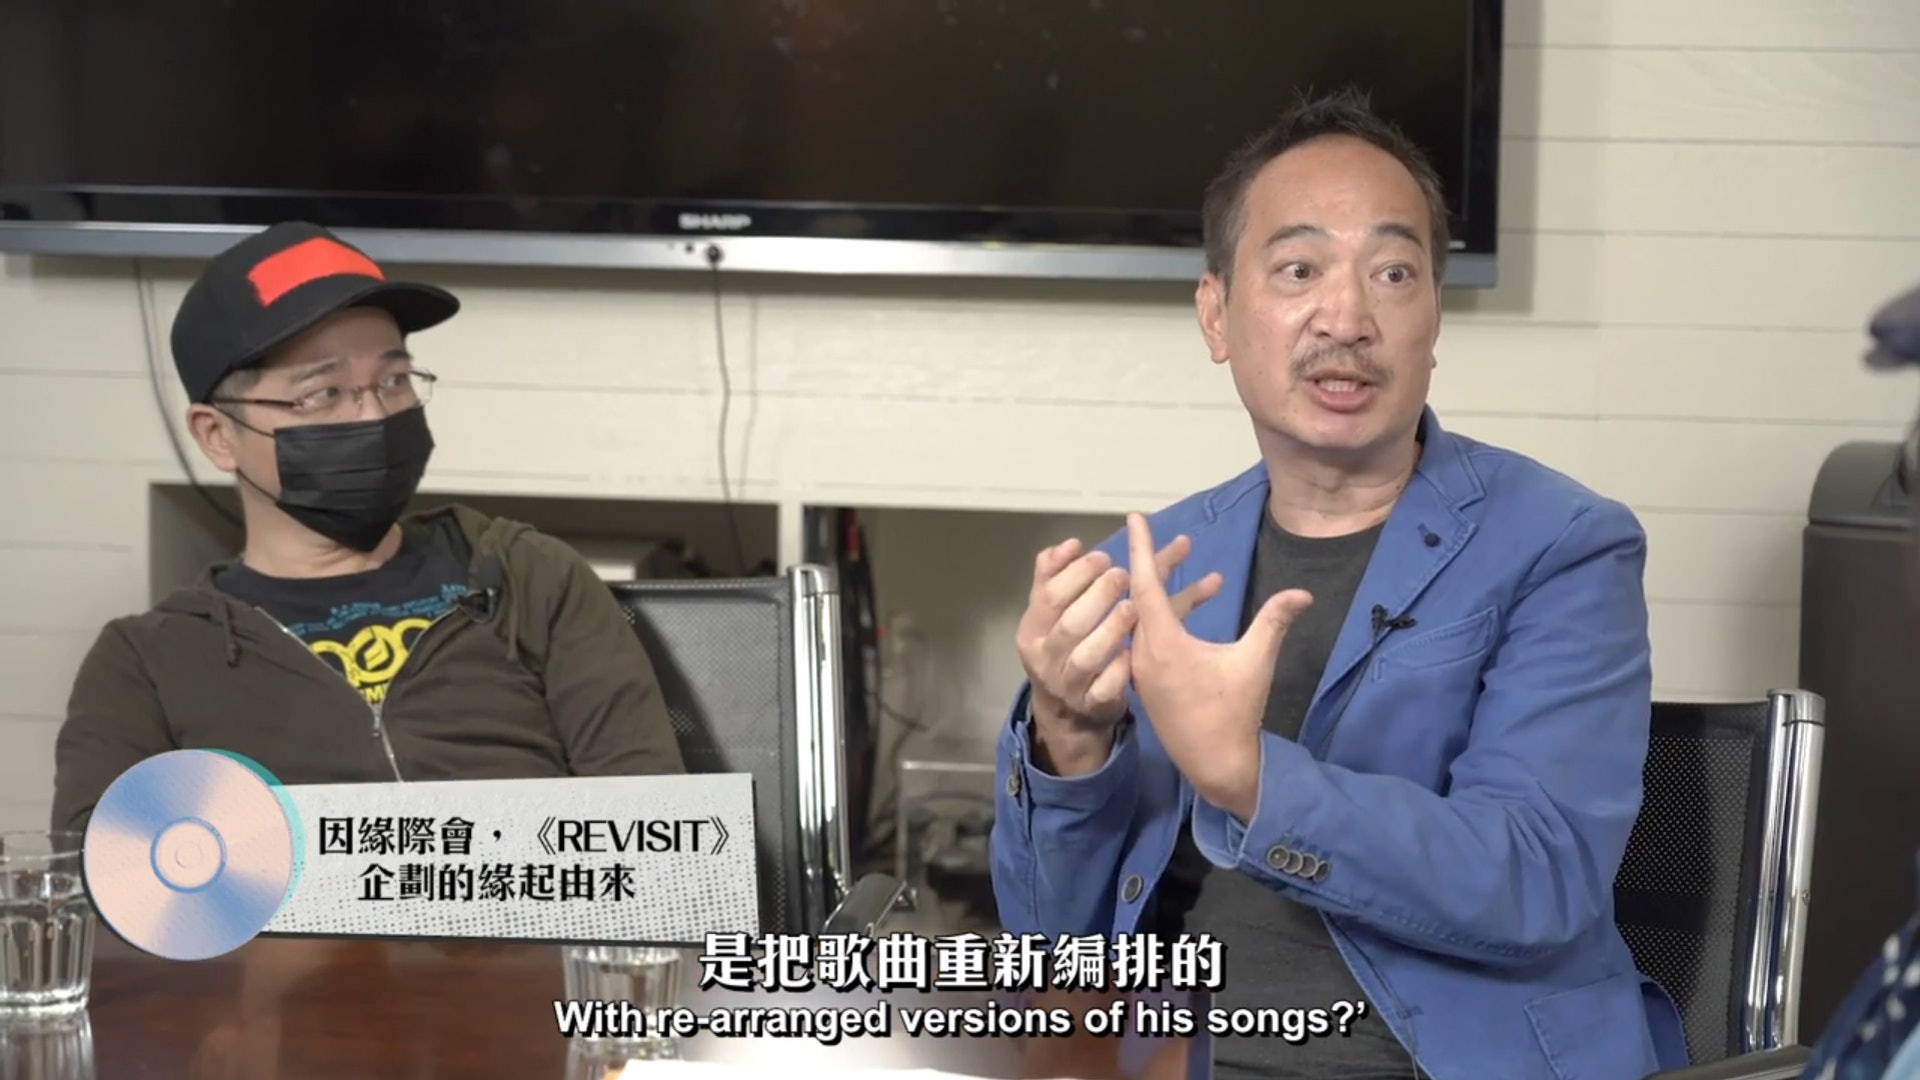 Alvin（右）解釋專輯名稱《REVISIT》有老朋友重遇的意思。（影片截圖）